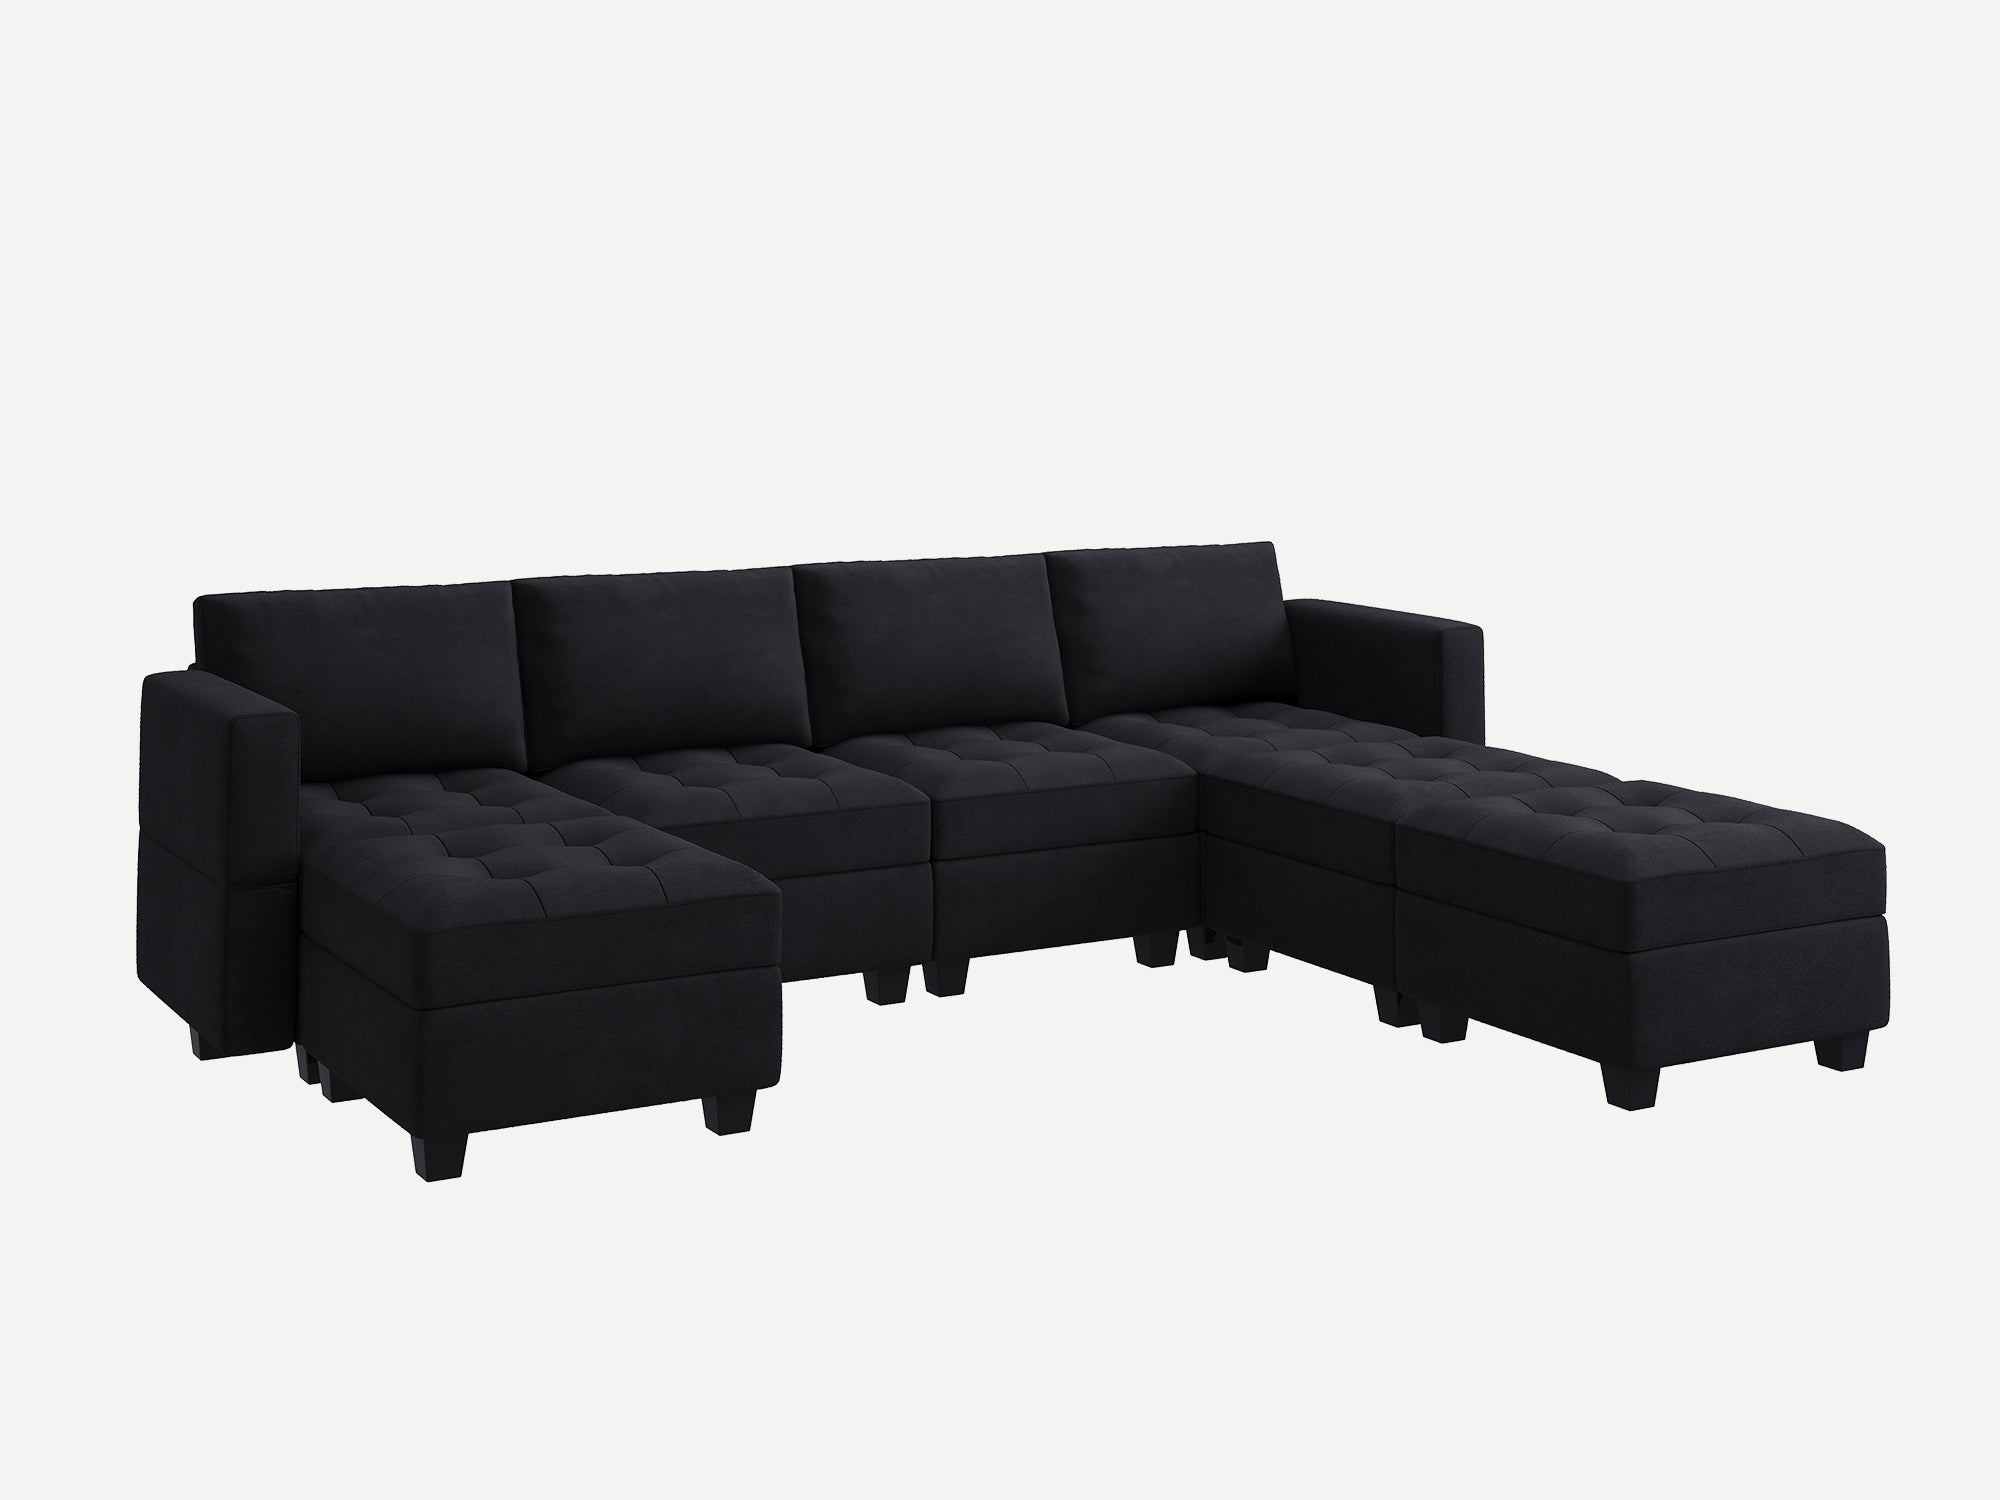 HONBAY 7-Piece Velvet Modular Sectional Adjustable Sofa With Storage Seat